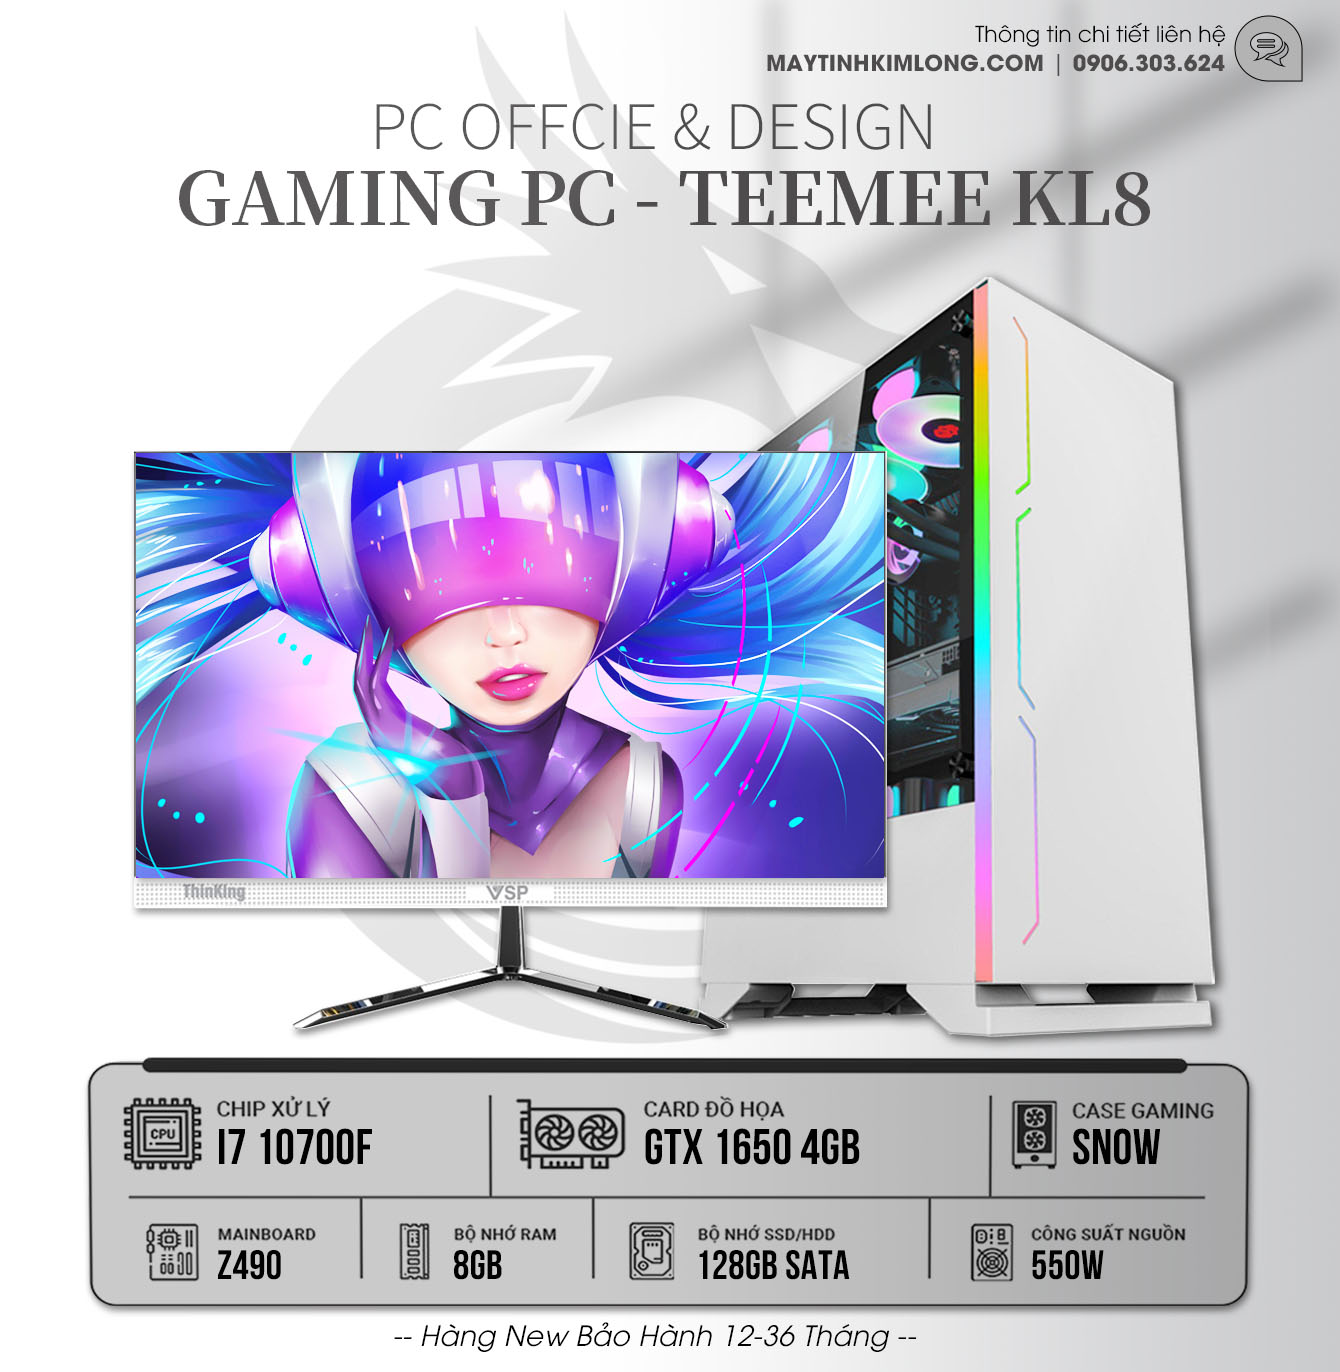 PC Gaming KL8 - Core i7 10700F/DDR4 8GB/SSD128GB/GTX1650 4G/PSU 550W/Main Z490